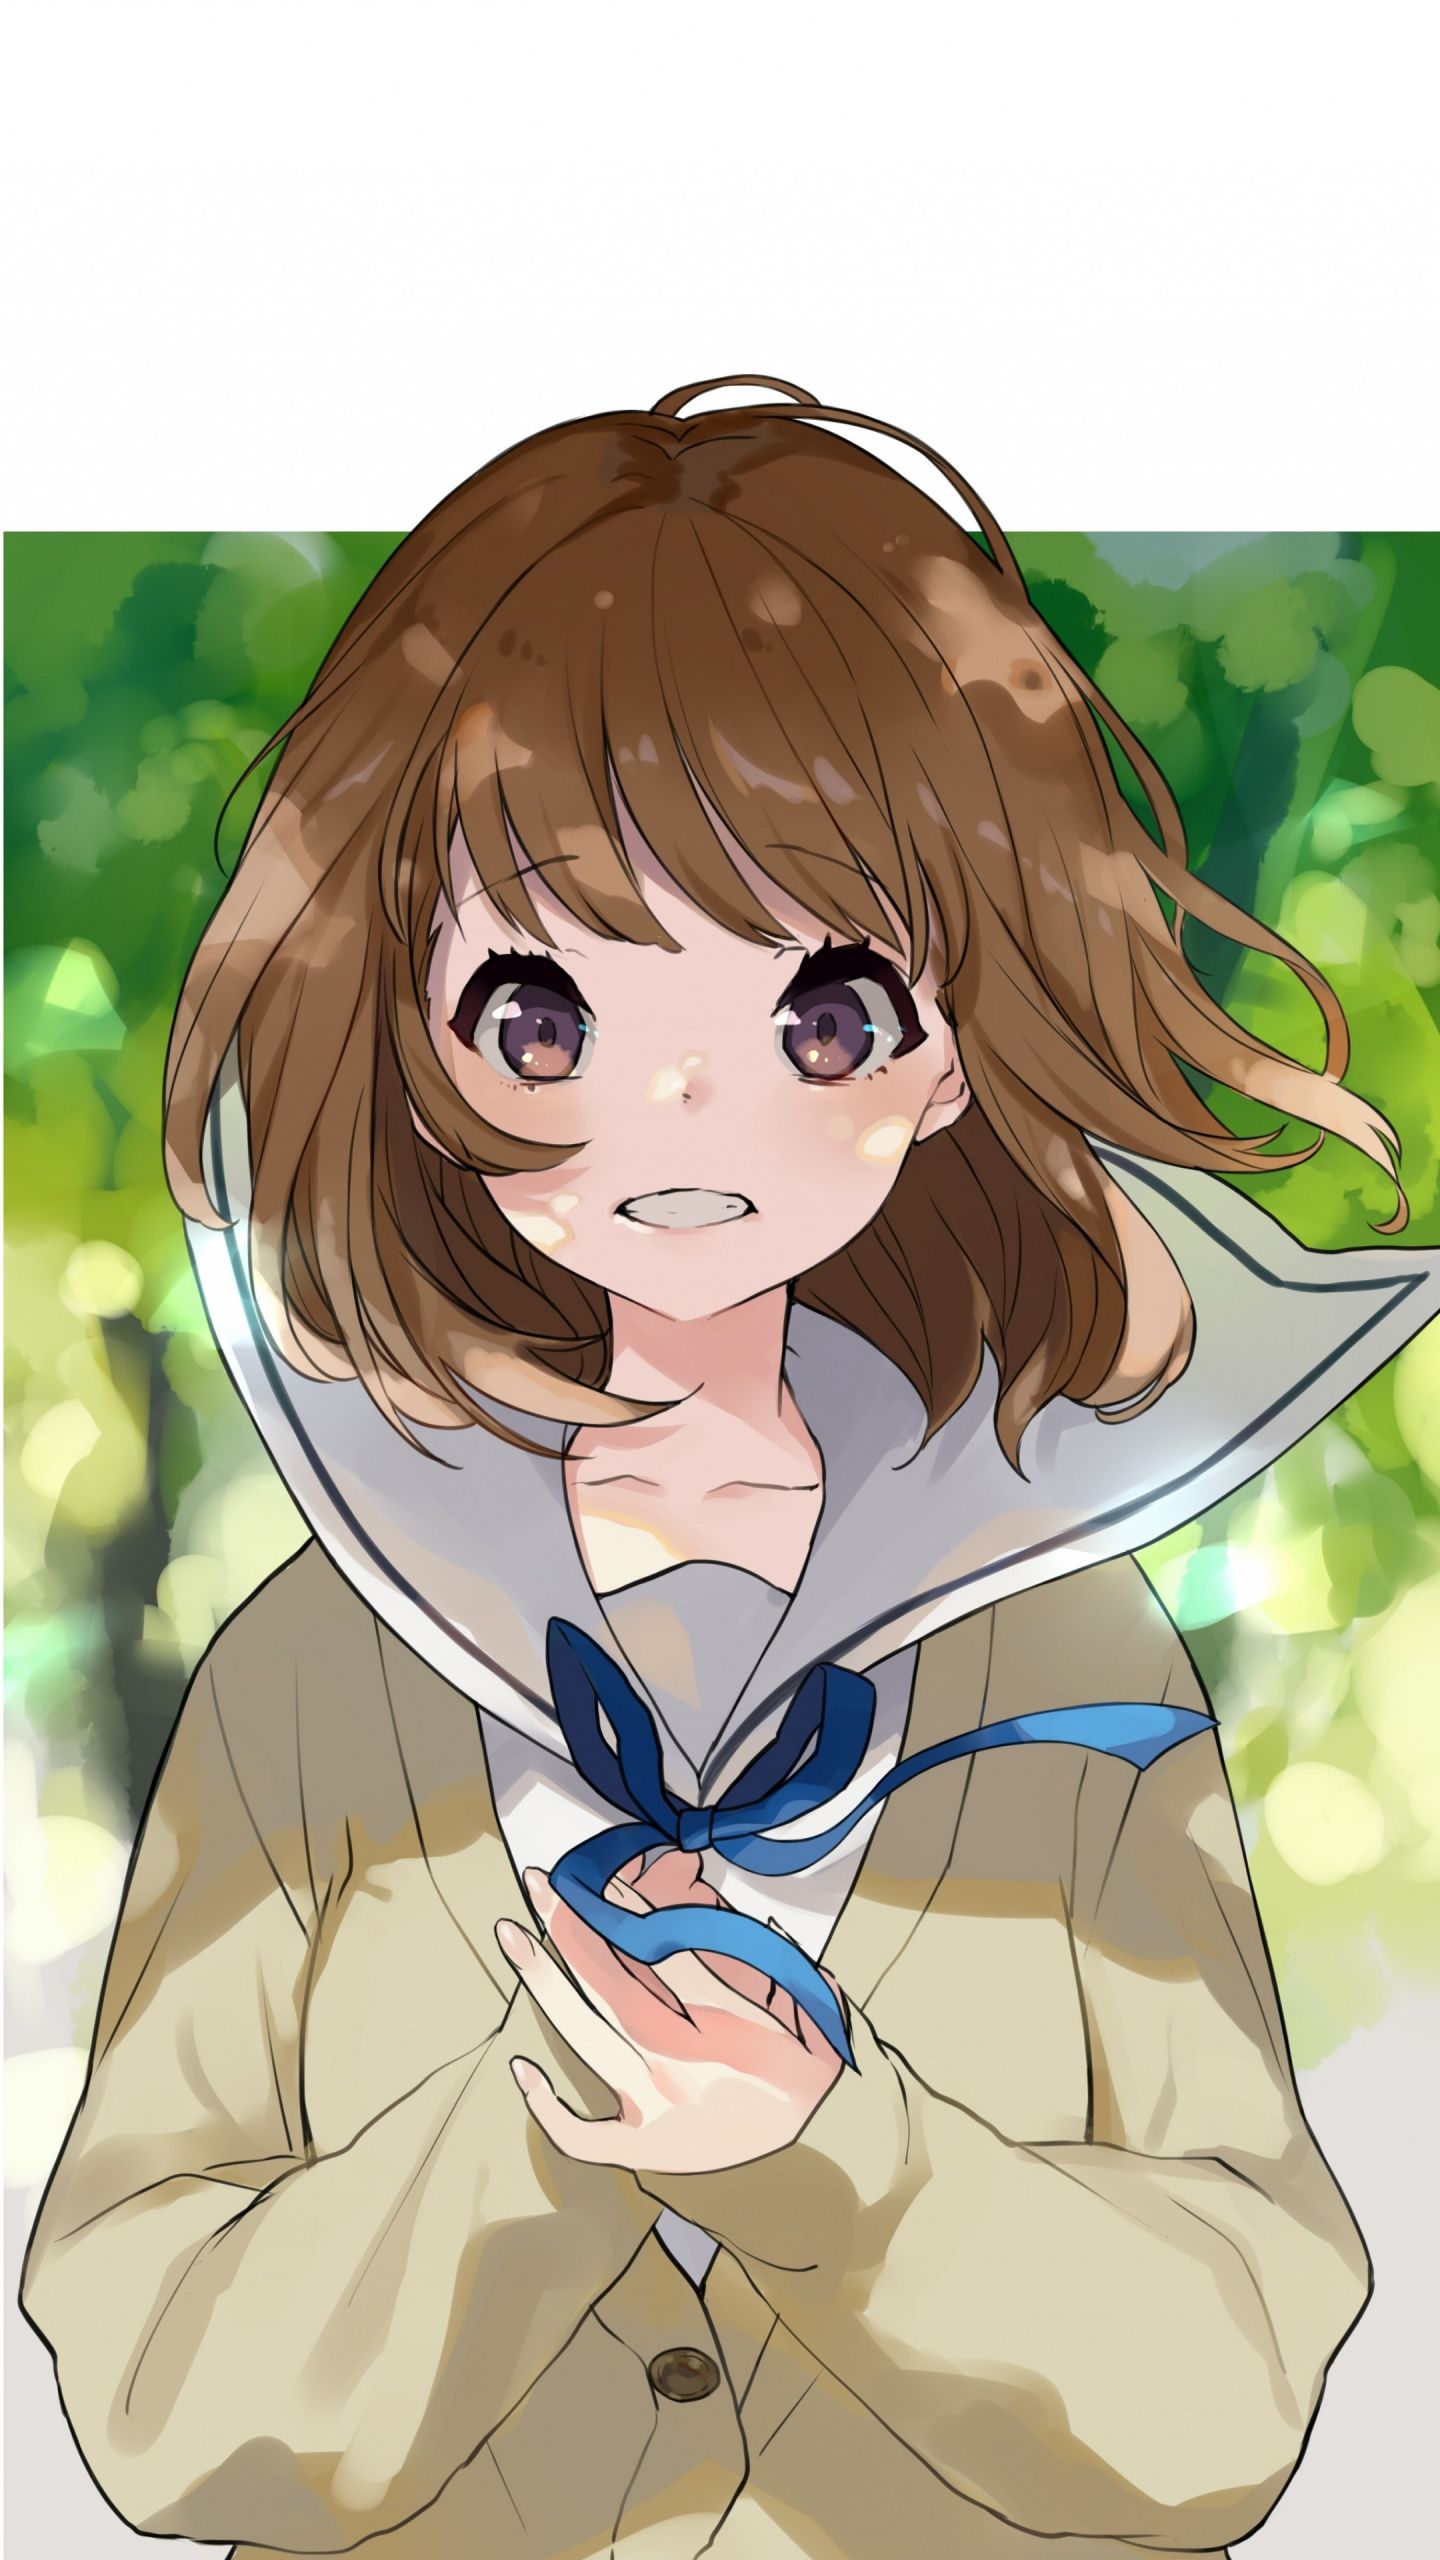 Short Anime Hairstyles
 Download 2160x3840 wallpaper cute anime girl minimal